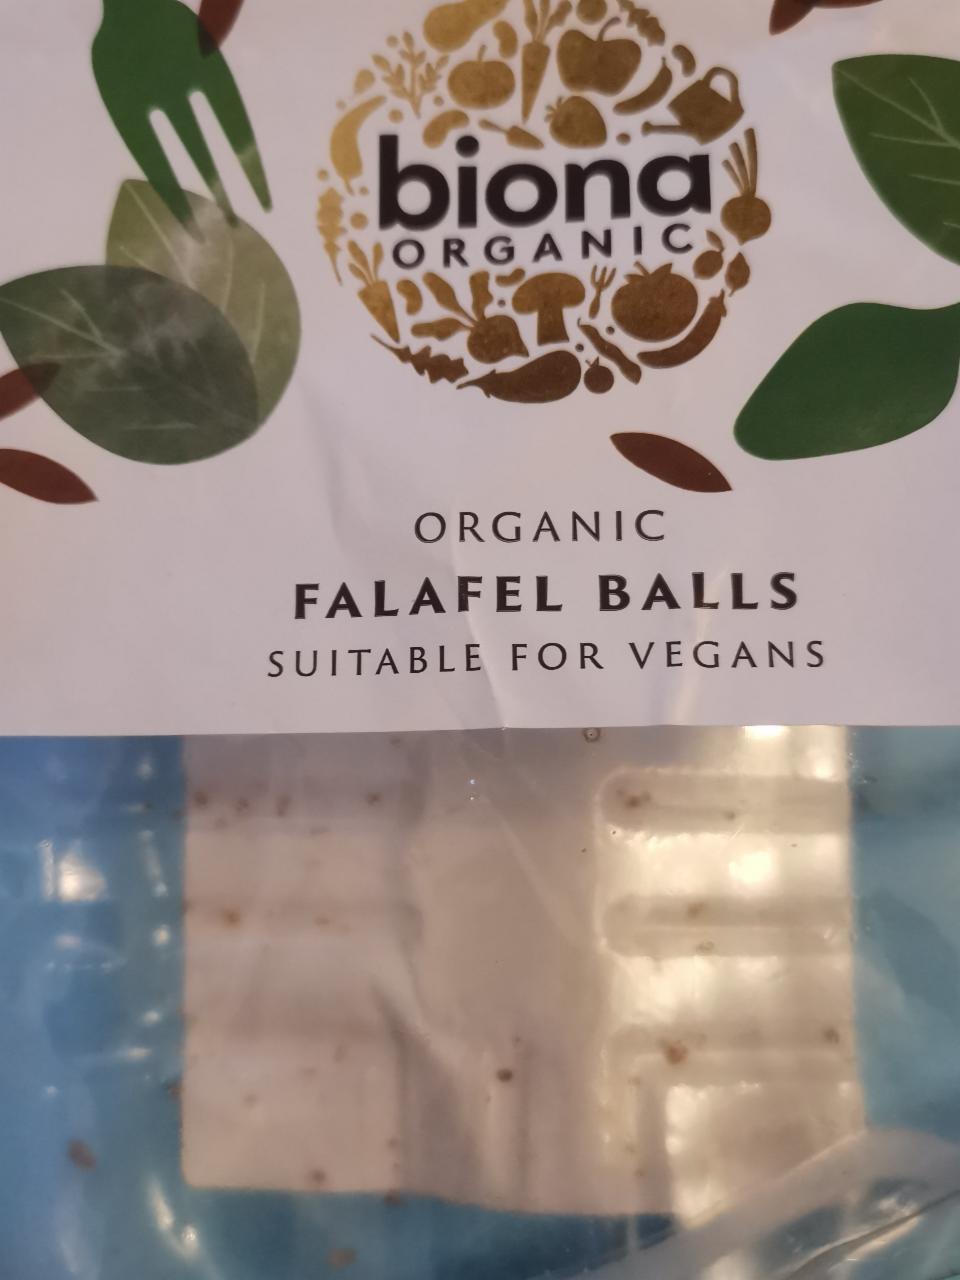 Fotografie - Falafel Balls Biona Organic